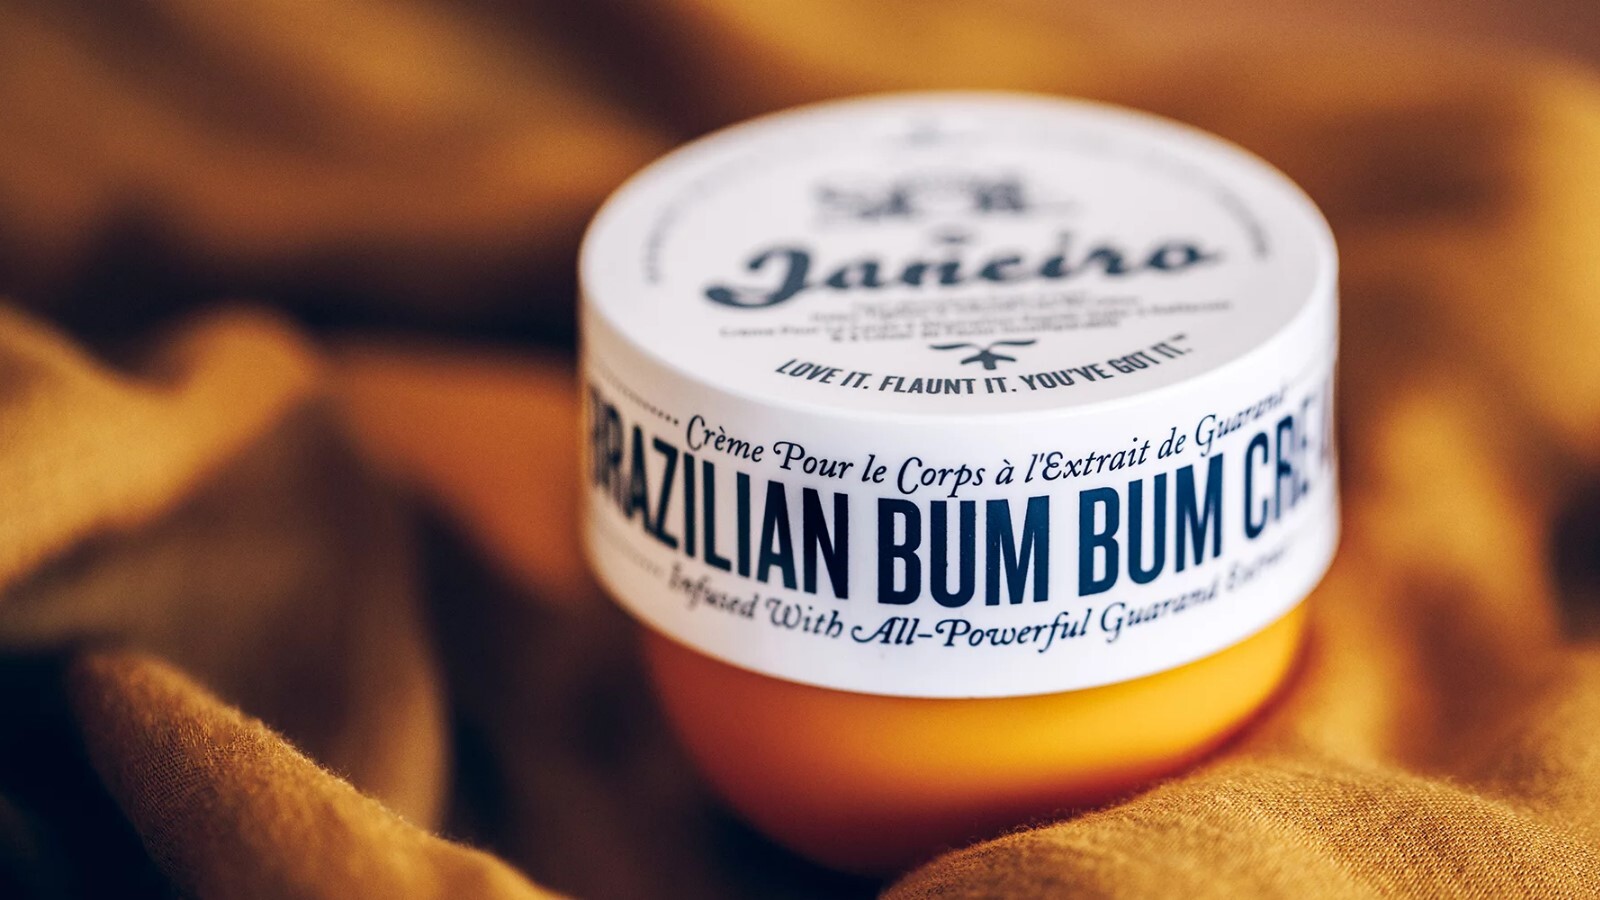 Brazilian Bum Bum Cream Review: Is It Really Promote Body Positivity?